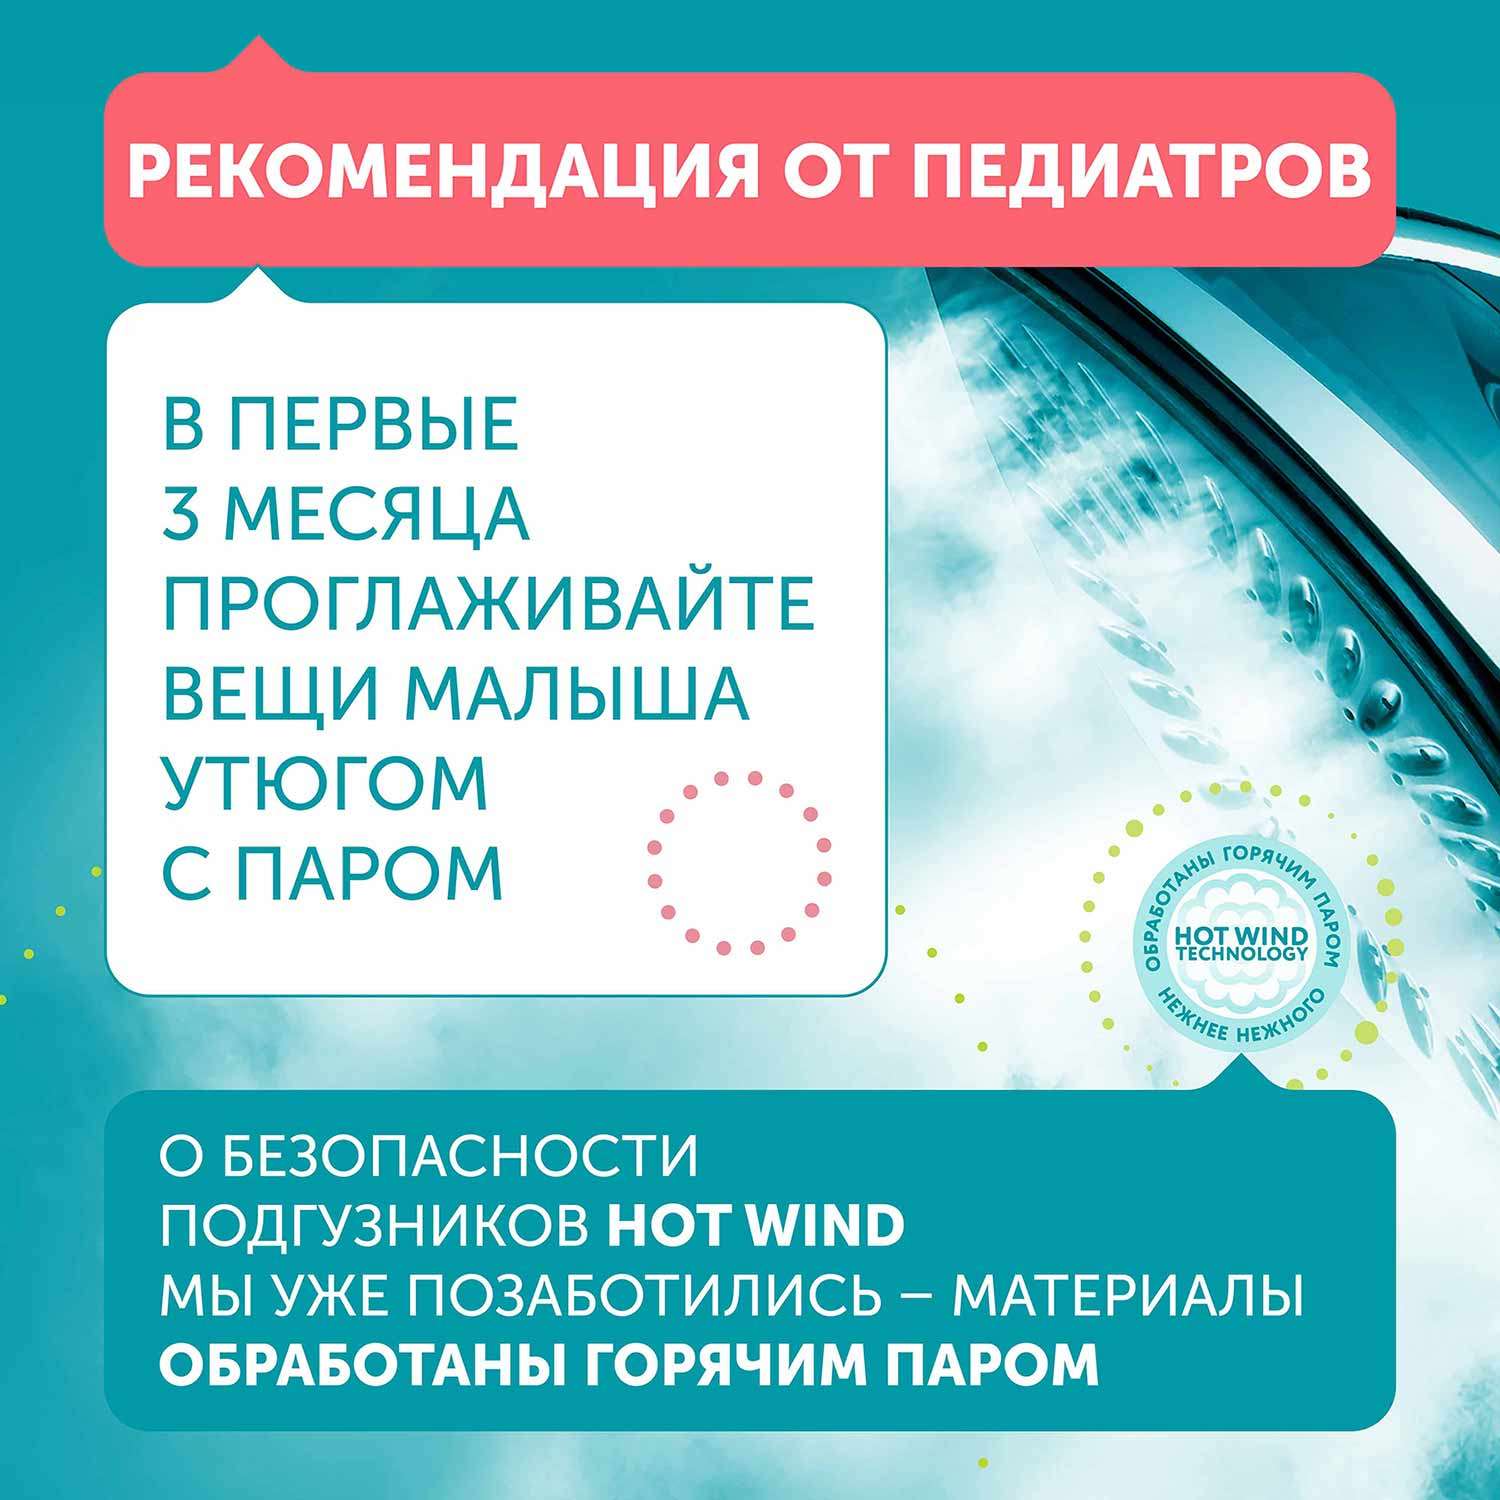 Подгузники LOVULAR hot wind 0-4 кг 18 шт - фото 11